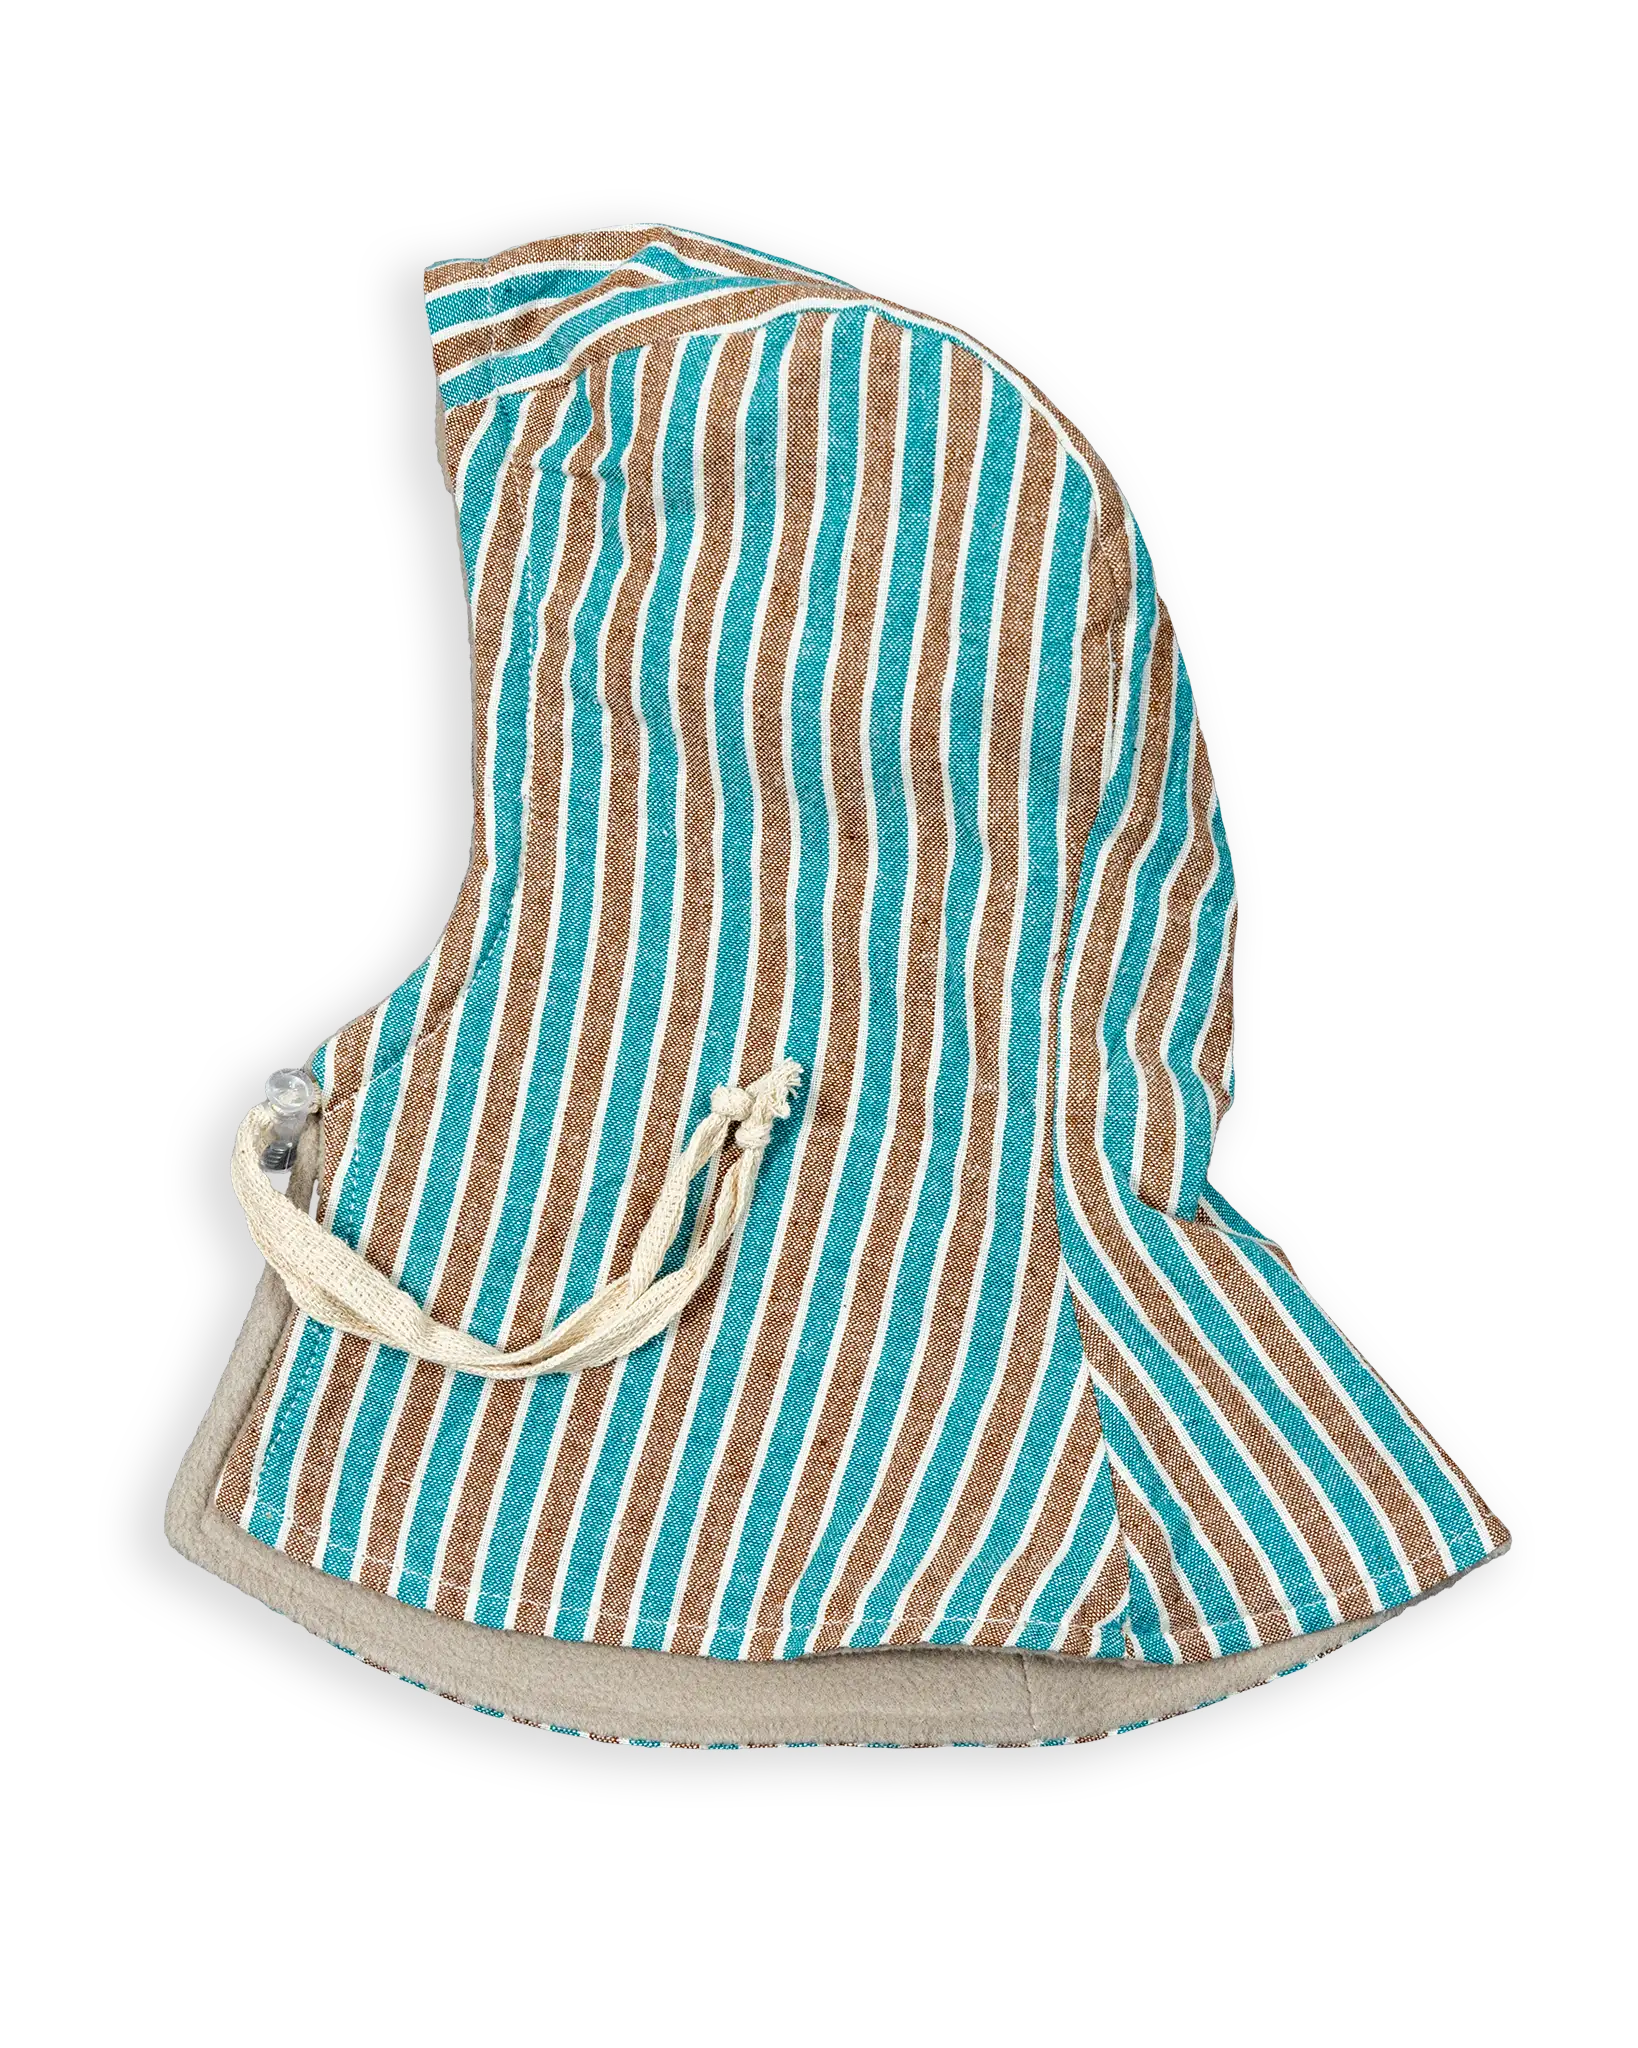 Balaclava Hat for Winter (0-2y)